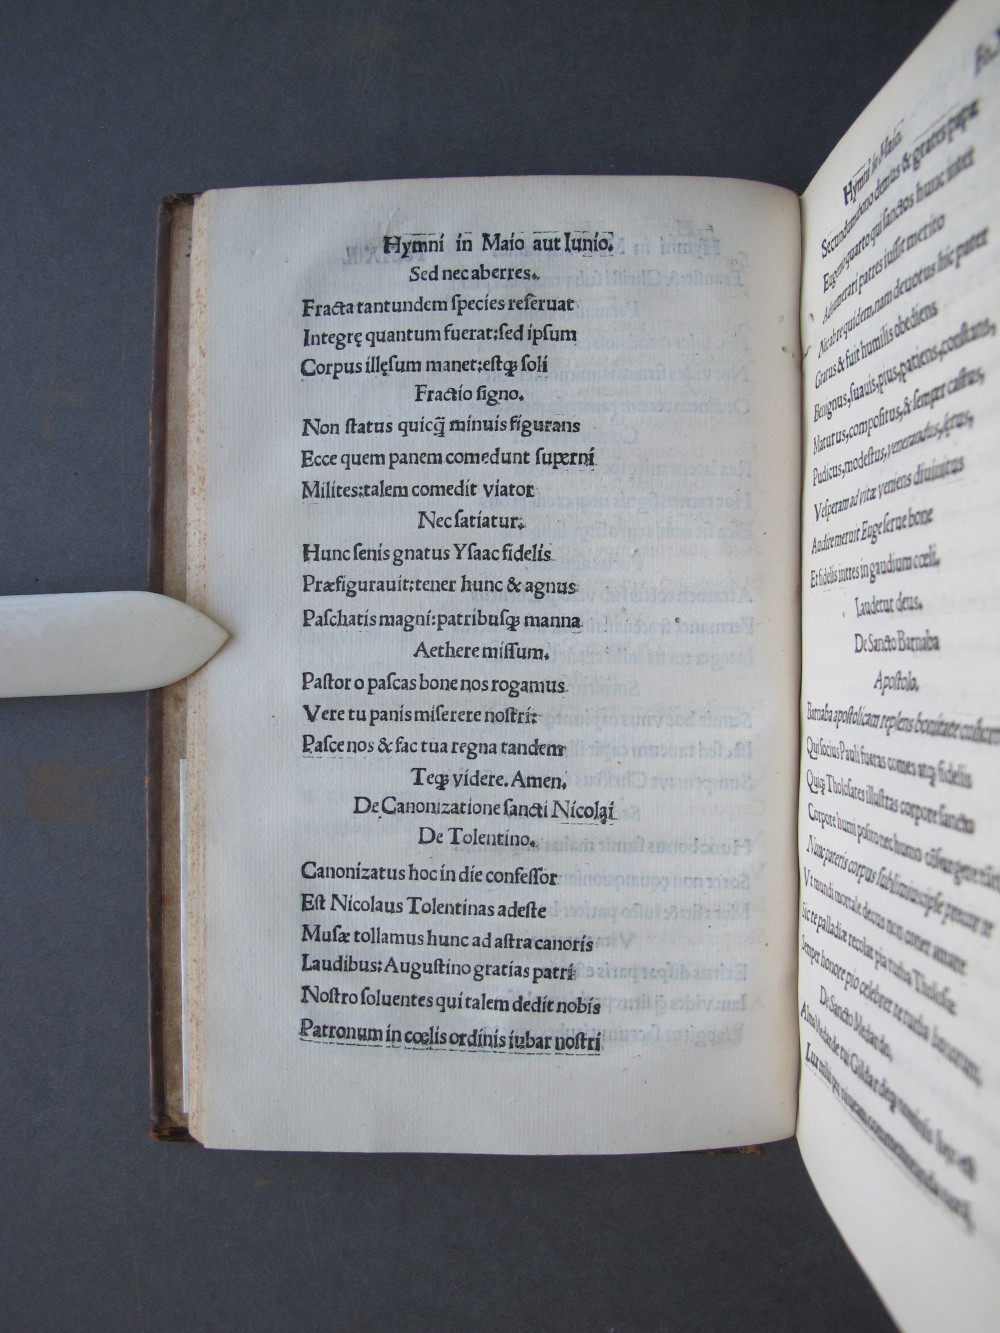 Folio 23 verso